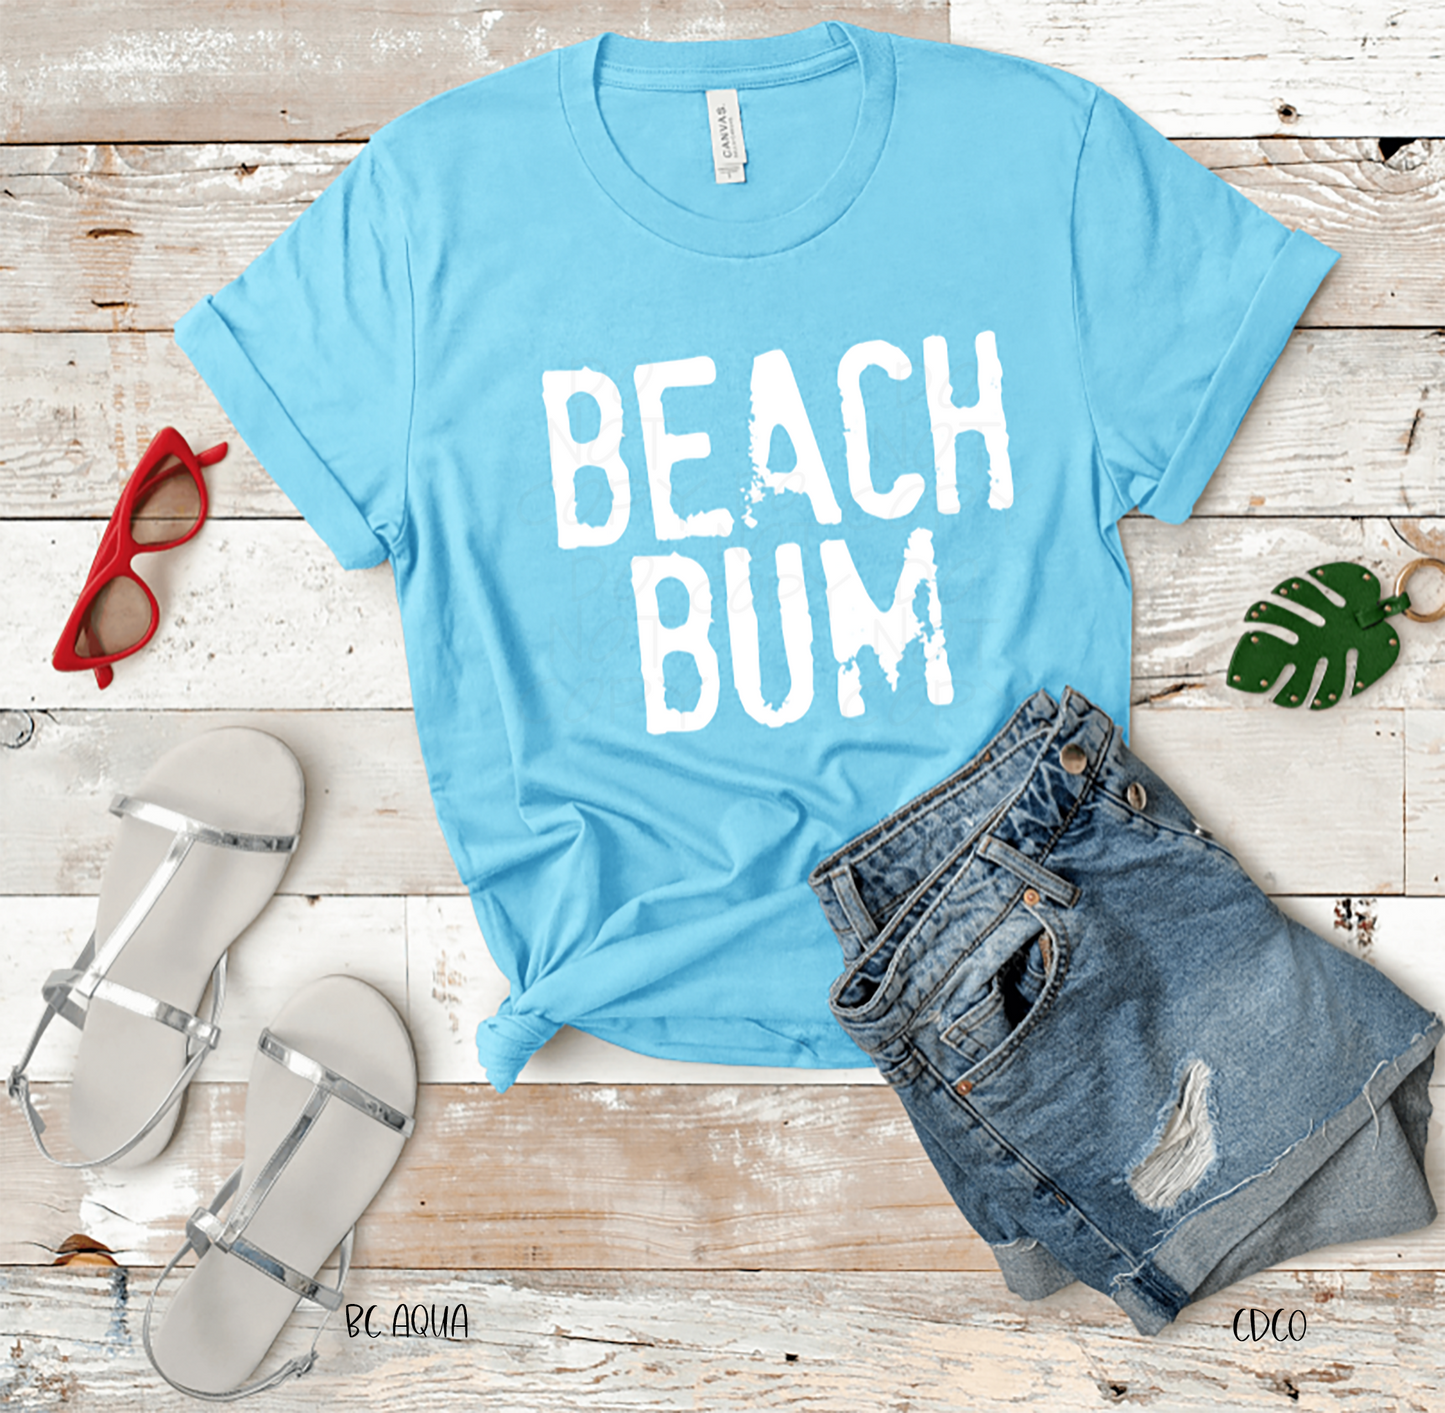 Beach Bum (325°) - Chase Design Co.